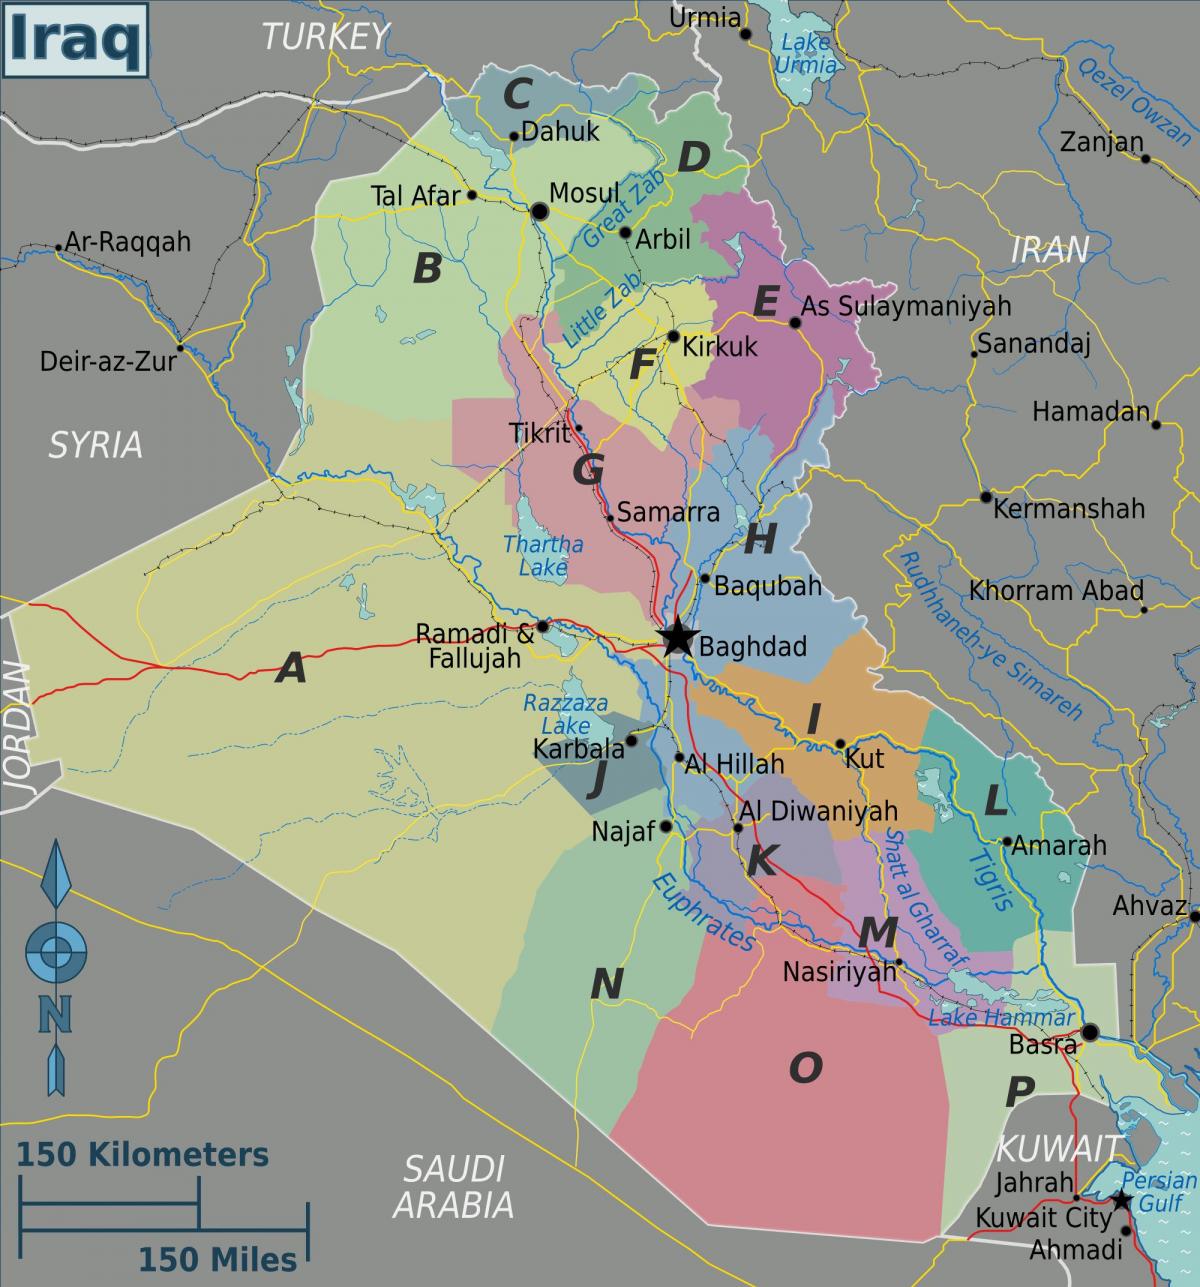 Žemėlapis Irako regionuose